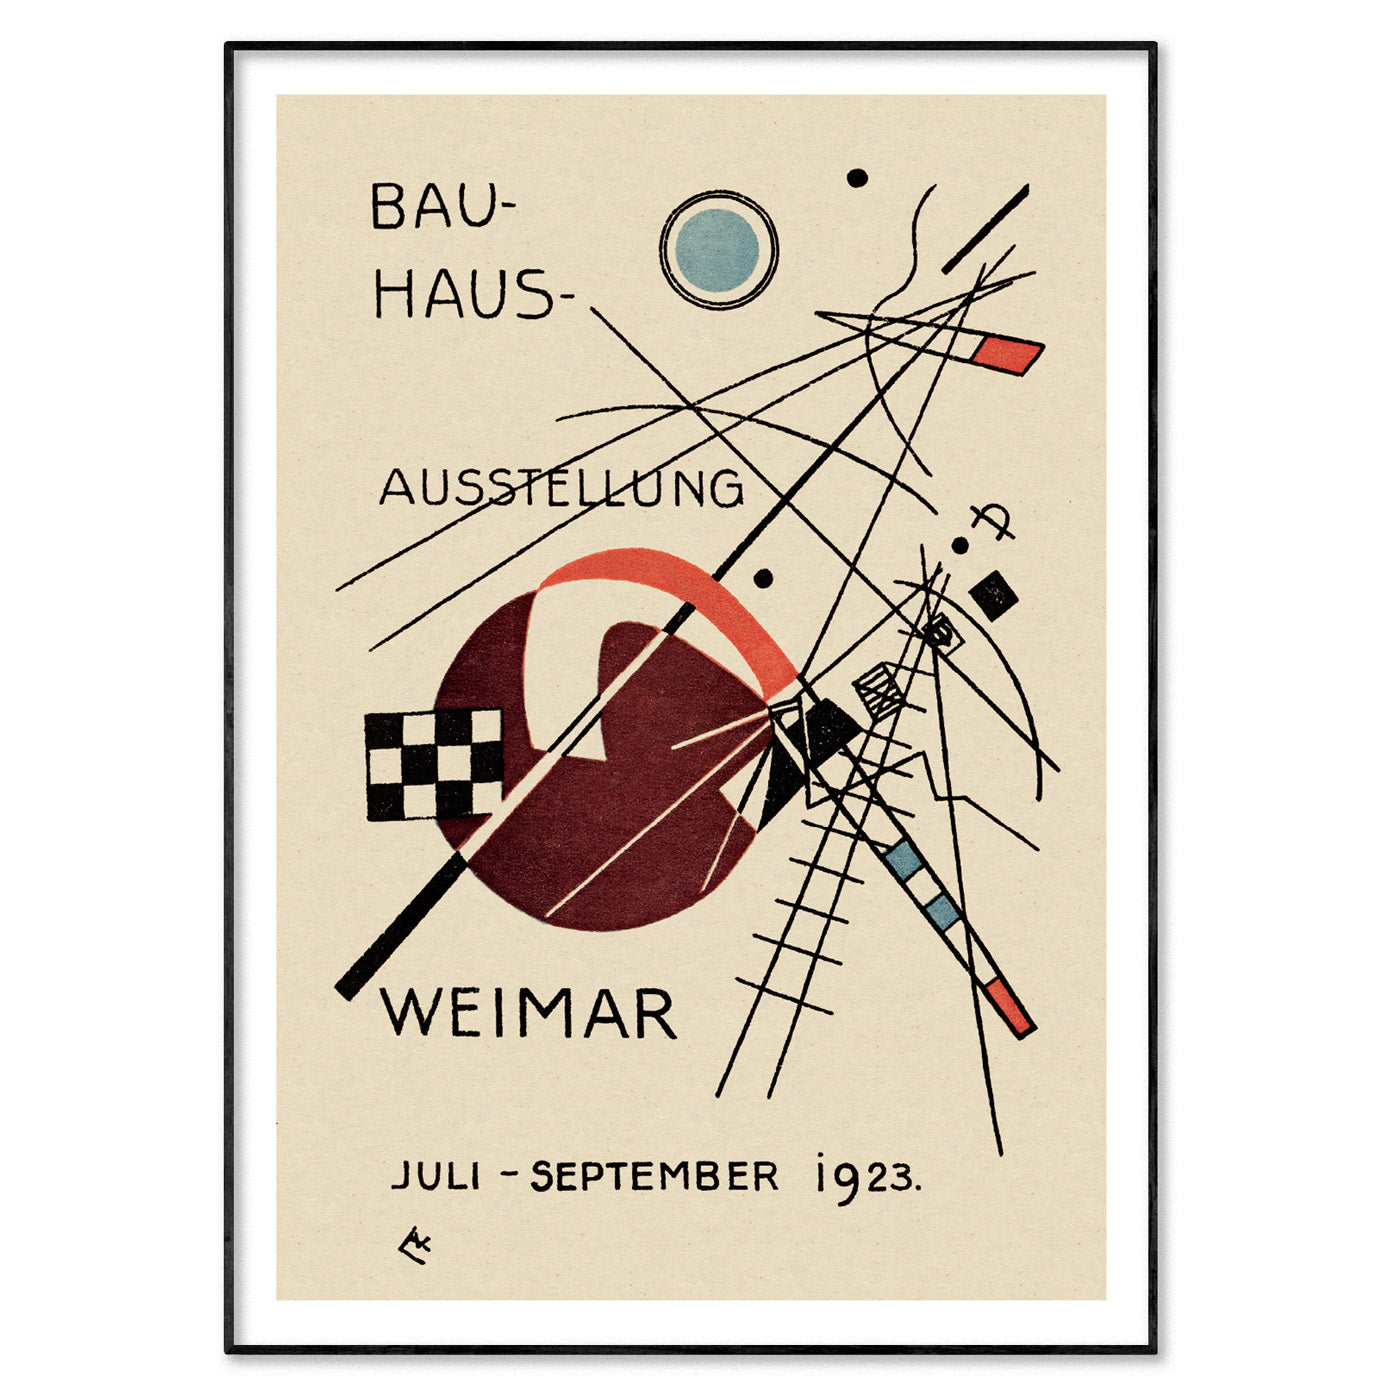 Bauhaus Poster by Wassily Kandinsky, 1923